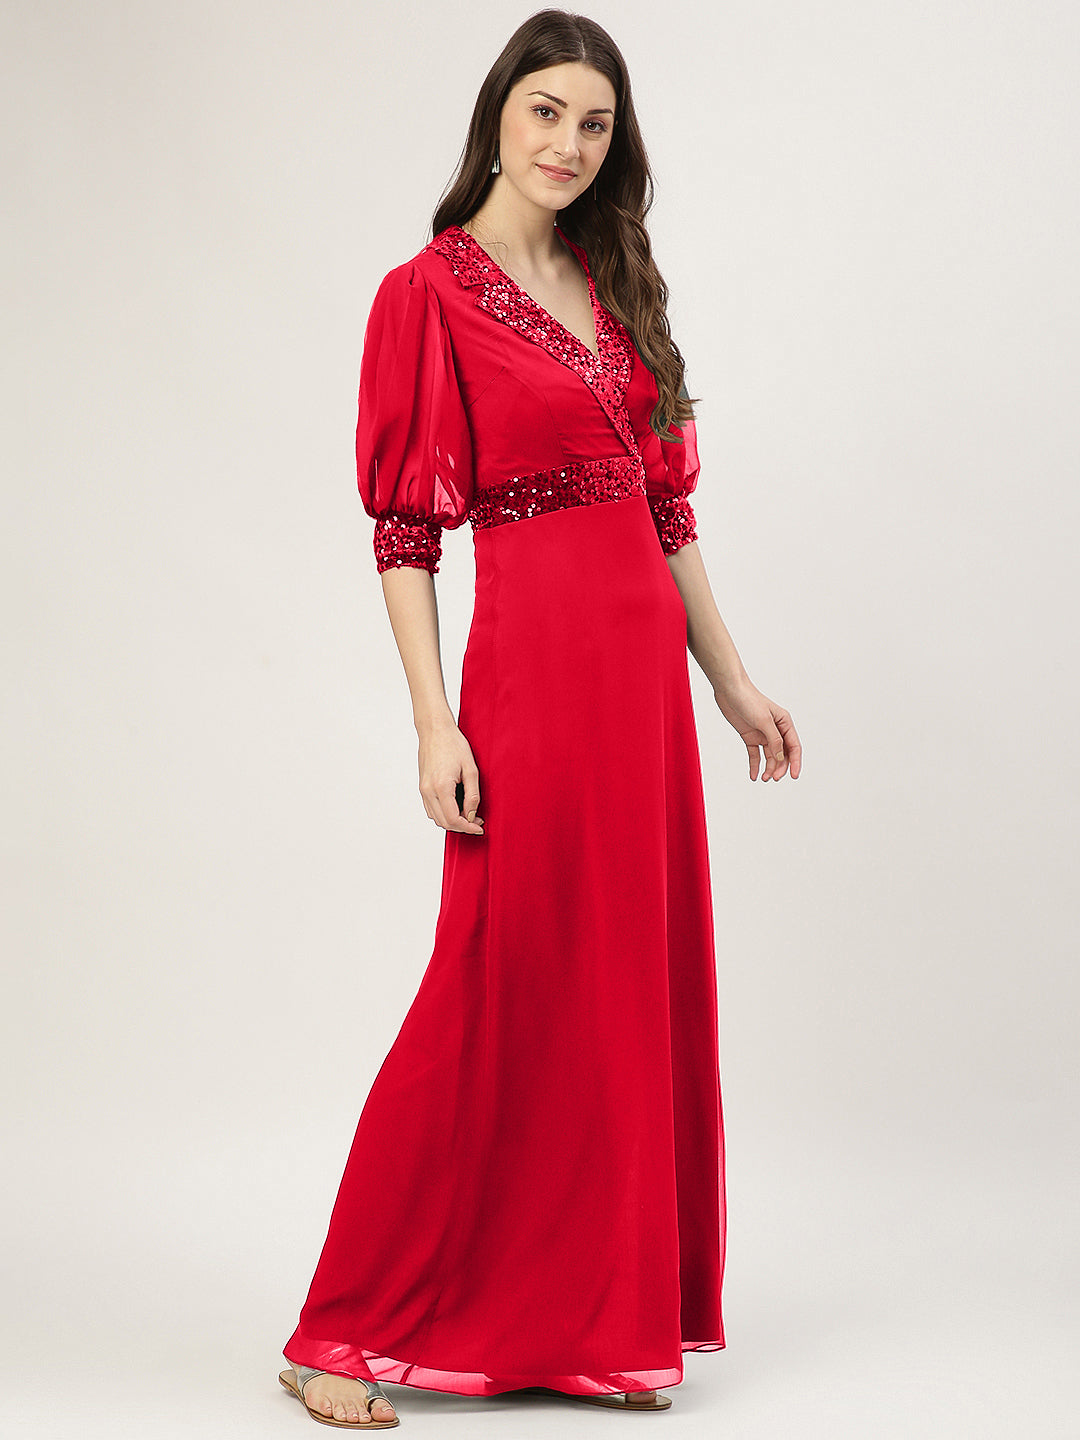 Red Embellished Slit Long Dress with 3/4 Sleeves